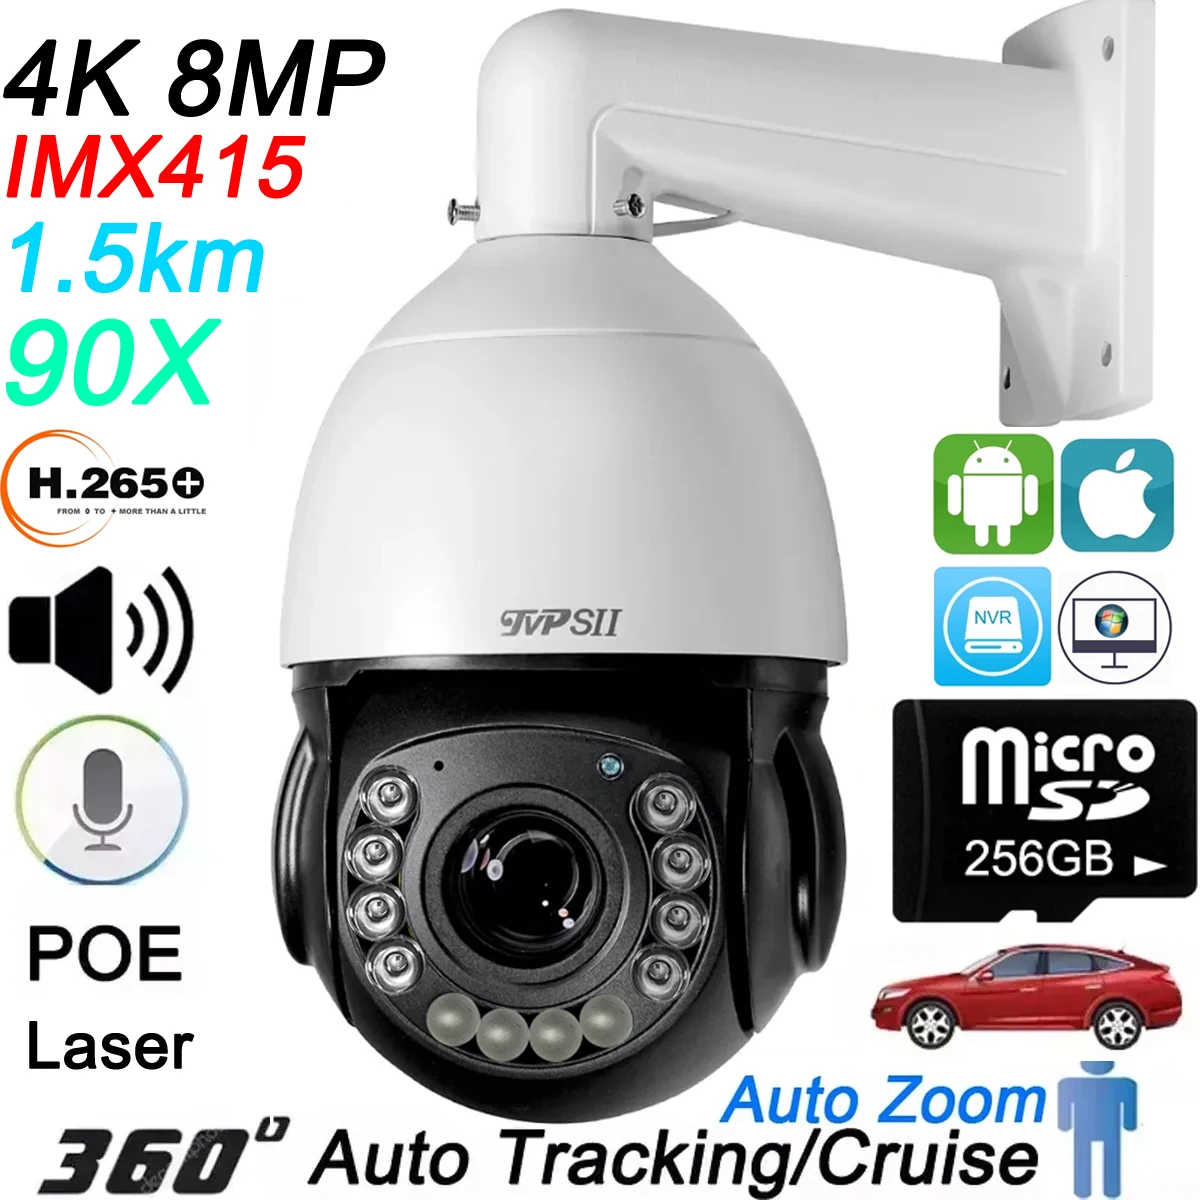 Metal 256gb Auto Tracking 8MP 4K IMX415 54X 90X Optical Zoom 360° Audio Outdoor ONVIF IP POE PTZ Speed Doom Surveillance Camera